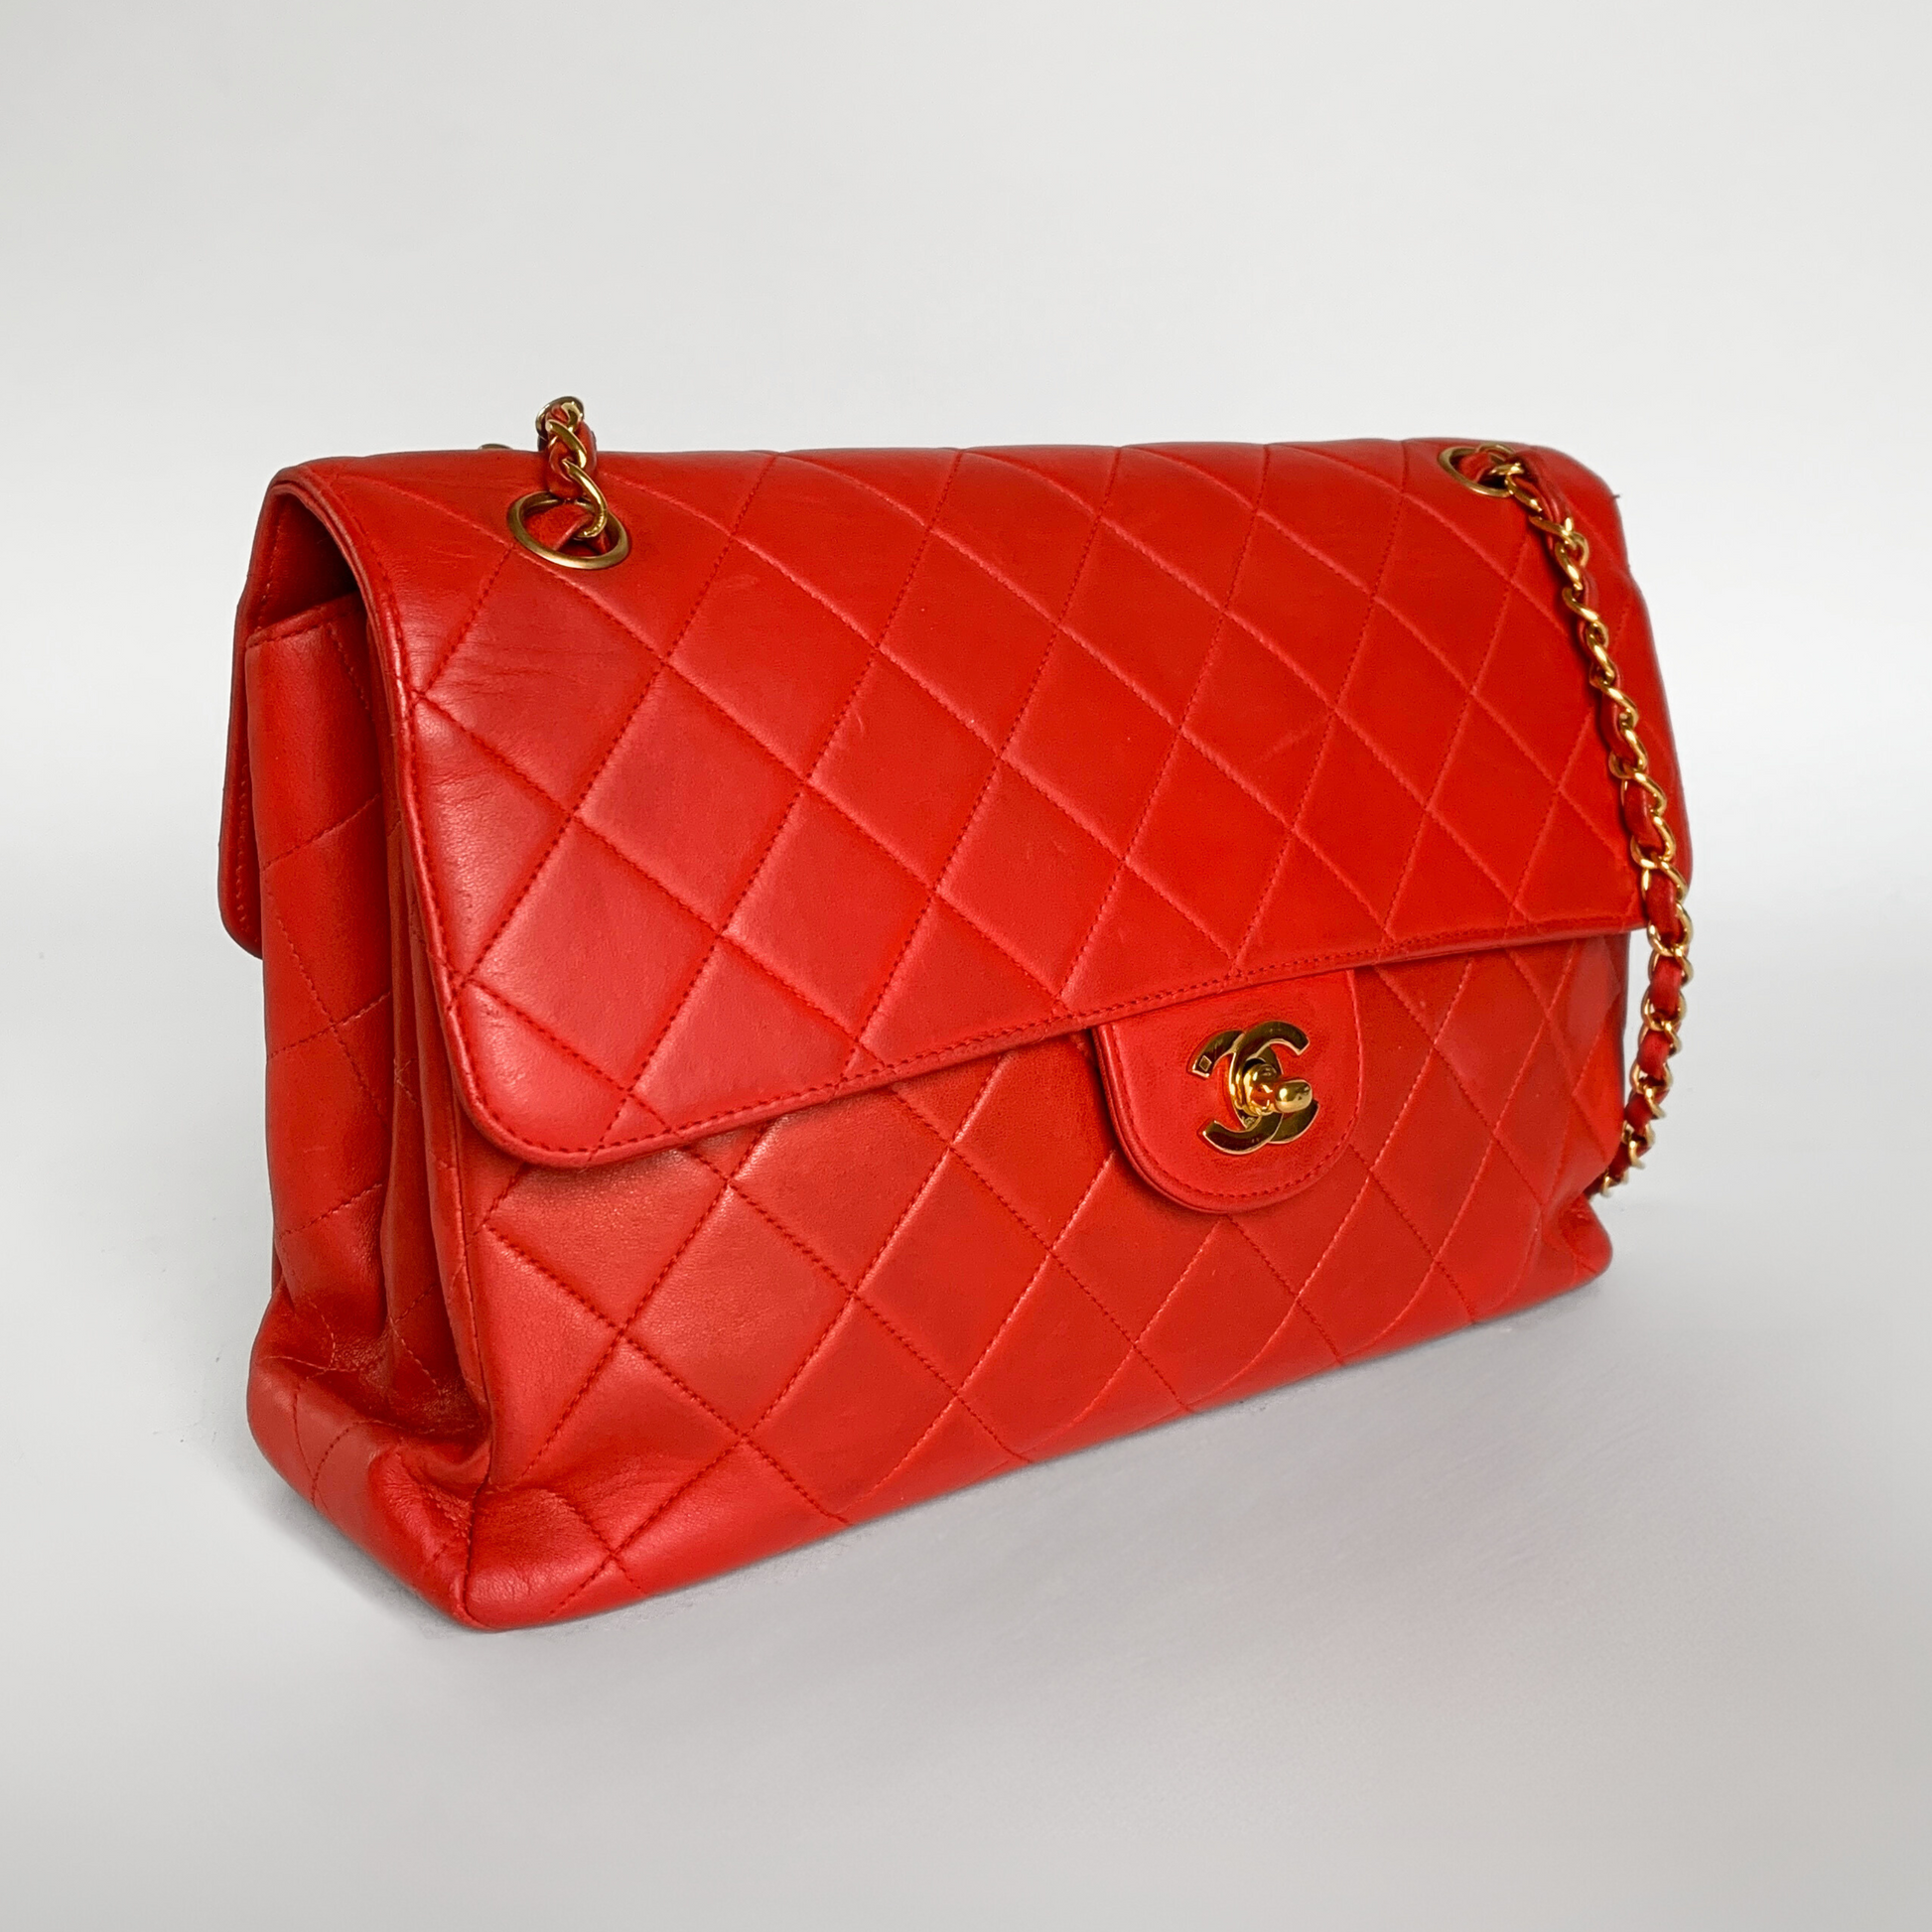 Chanel jumbo bag red  Red chanel, Chanel jumbo red, Chanel bag red